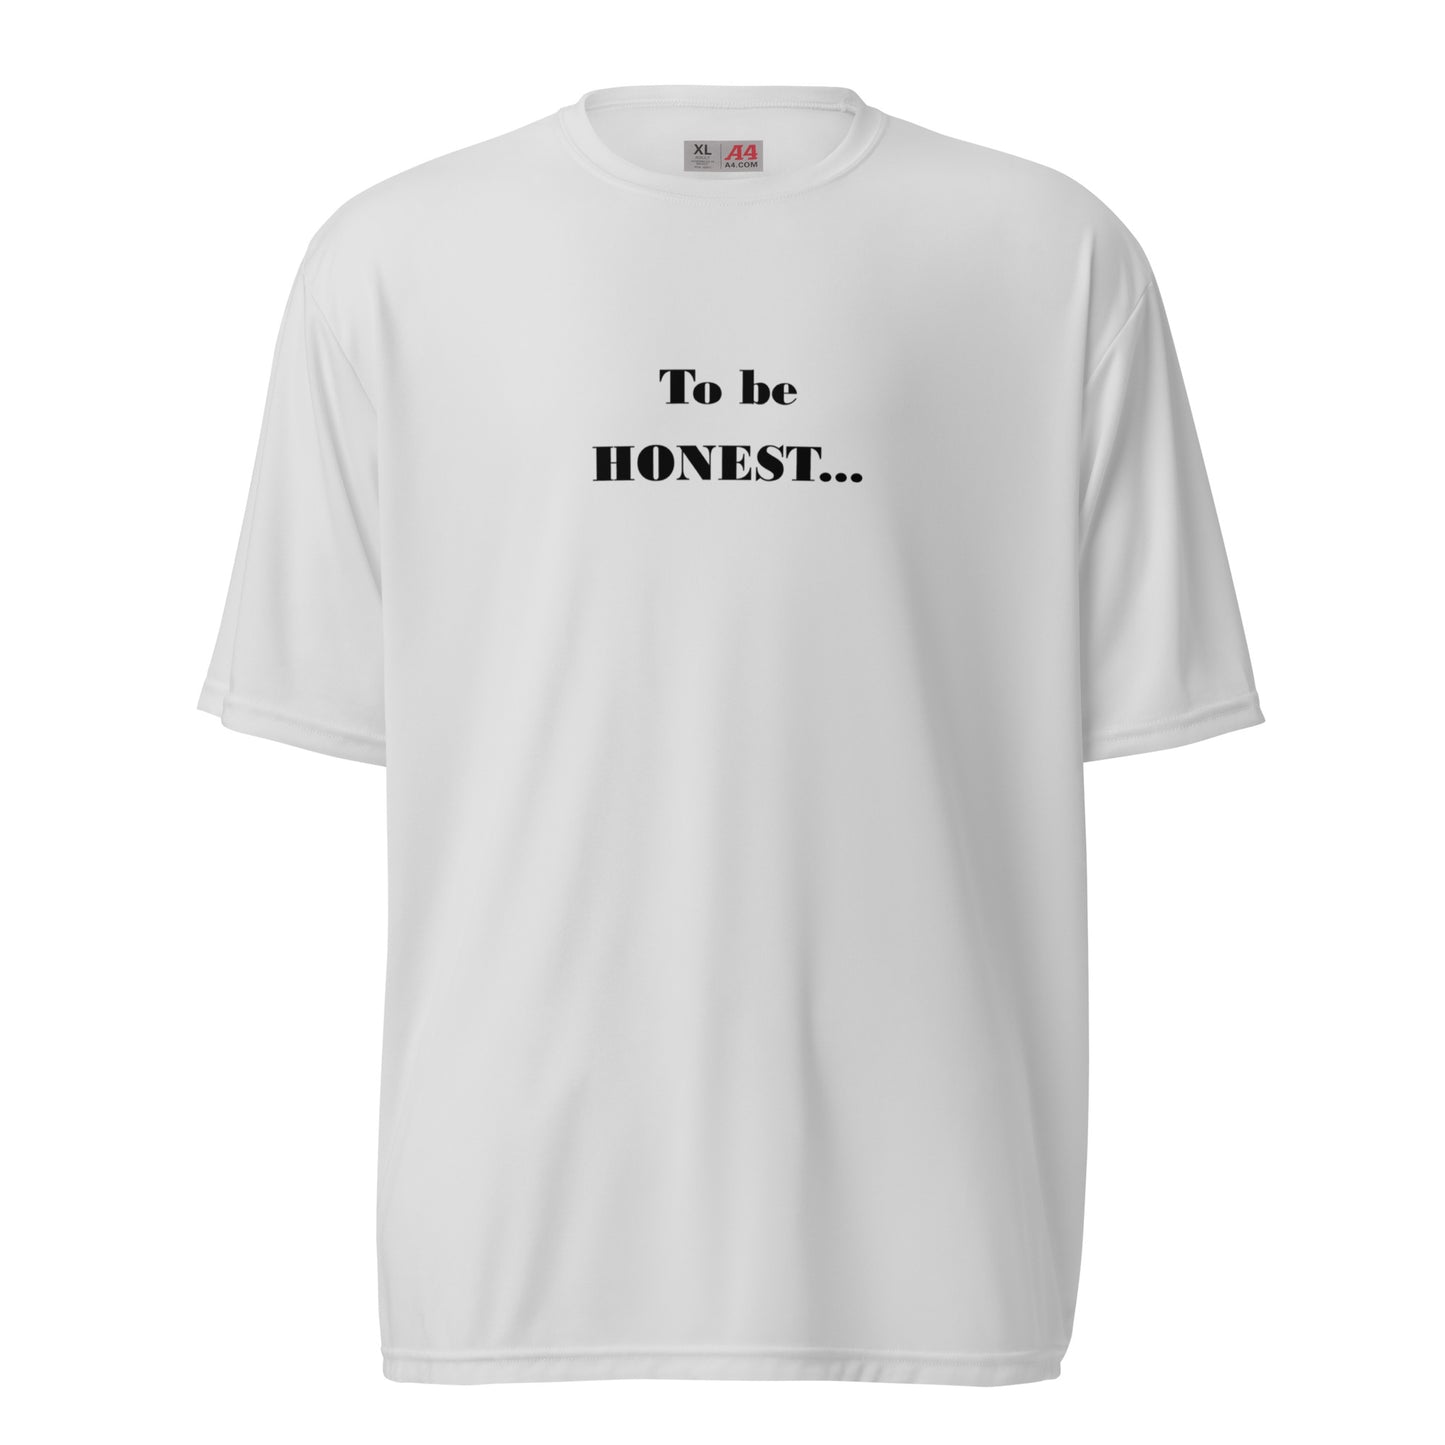 To Be Honest... Unisex performance crew neck t-shirt - Black Print